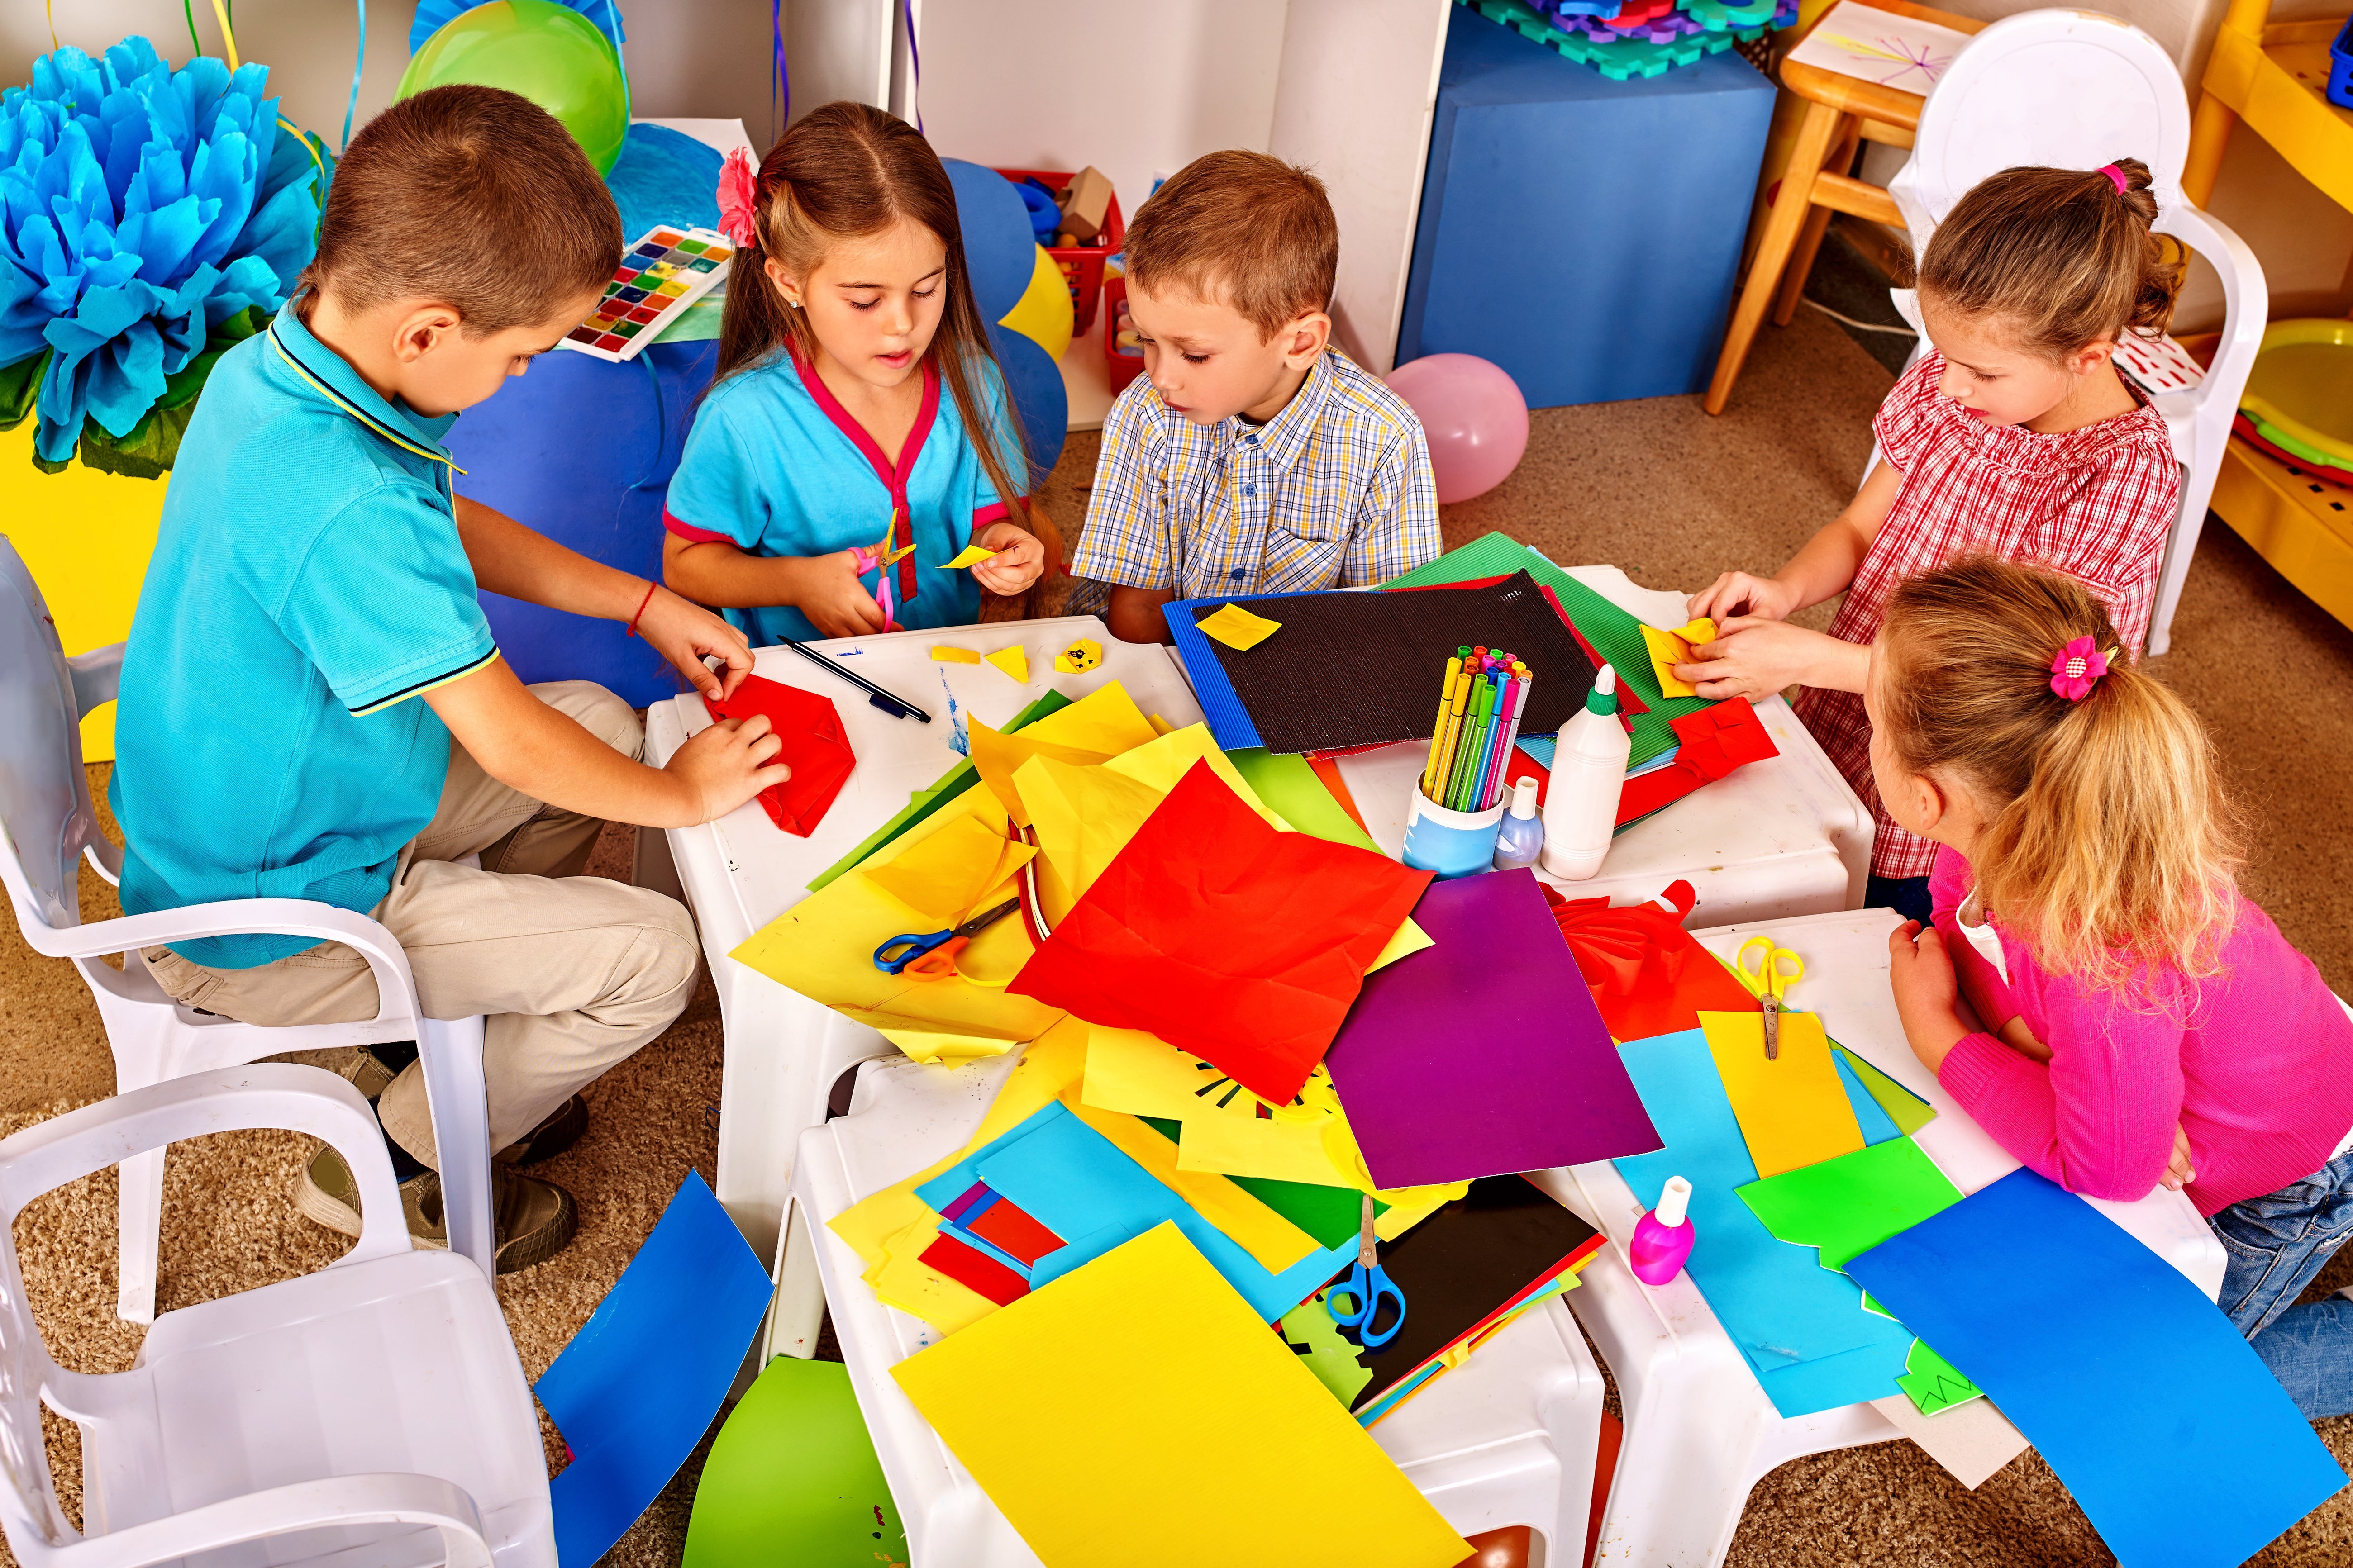 Children use colored paper for creativity.